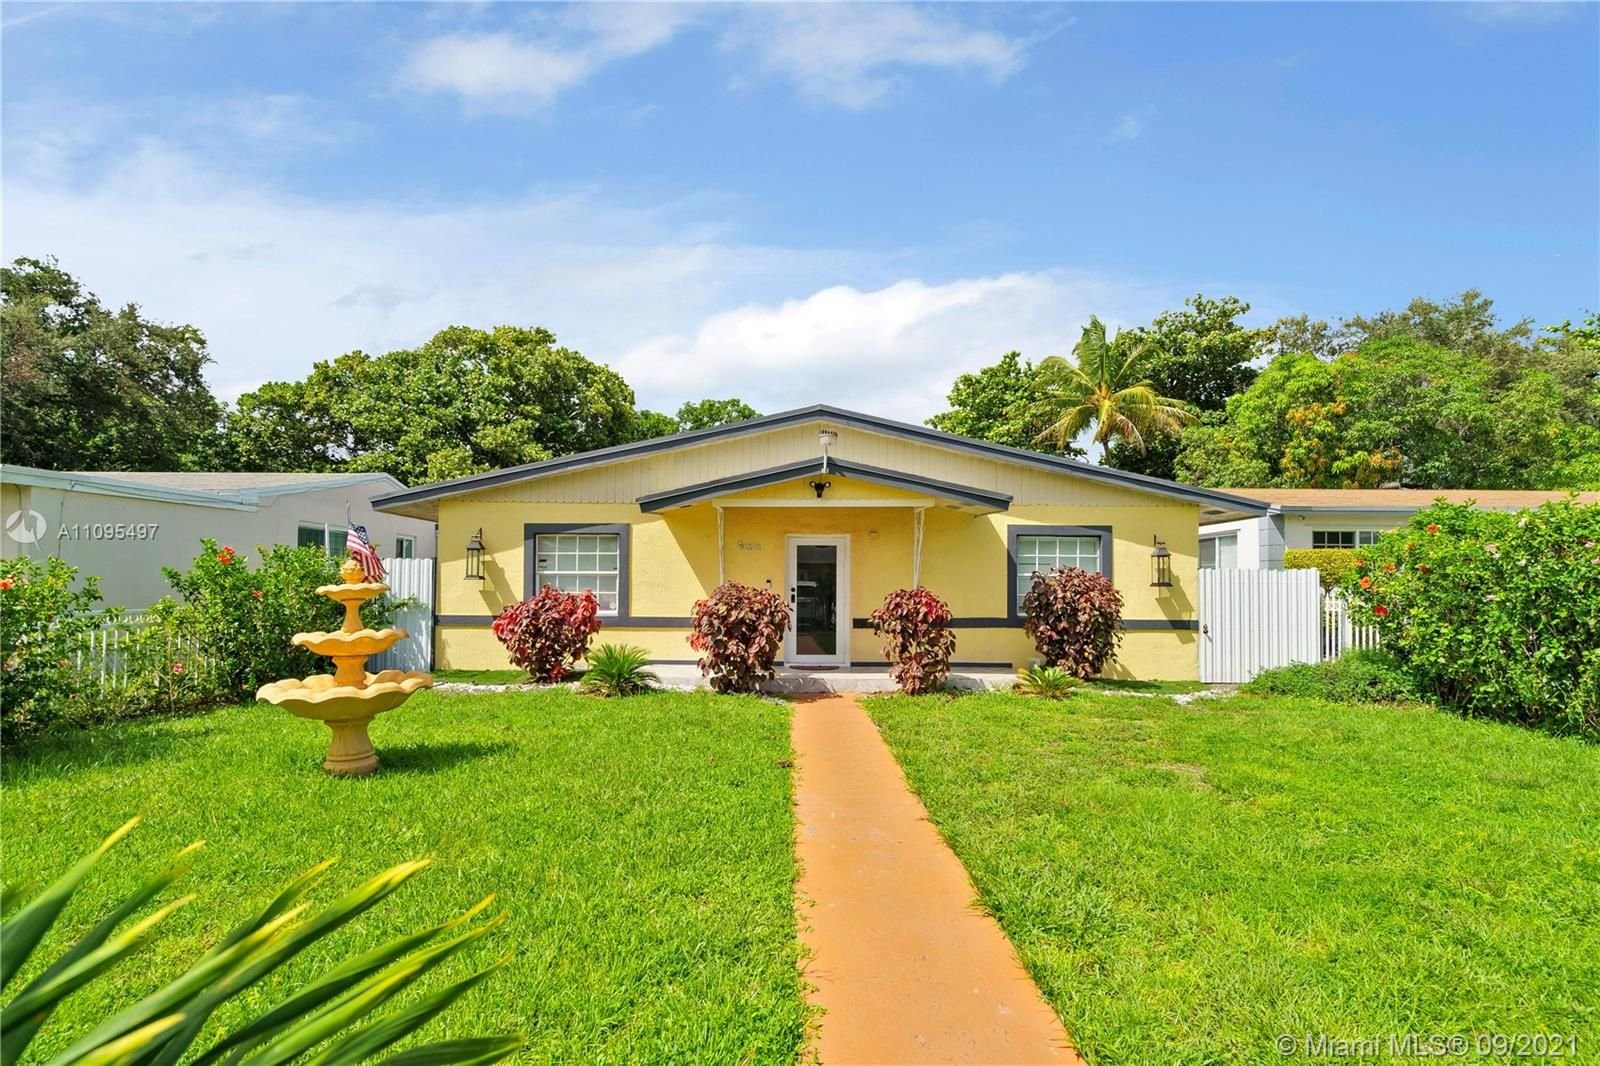 Real estate property located at 1241 Peri St, Miami-Dade County, Opa-locka, FL